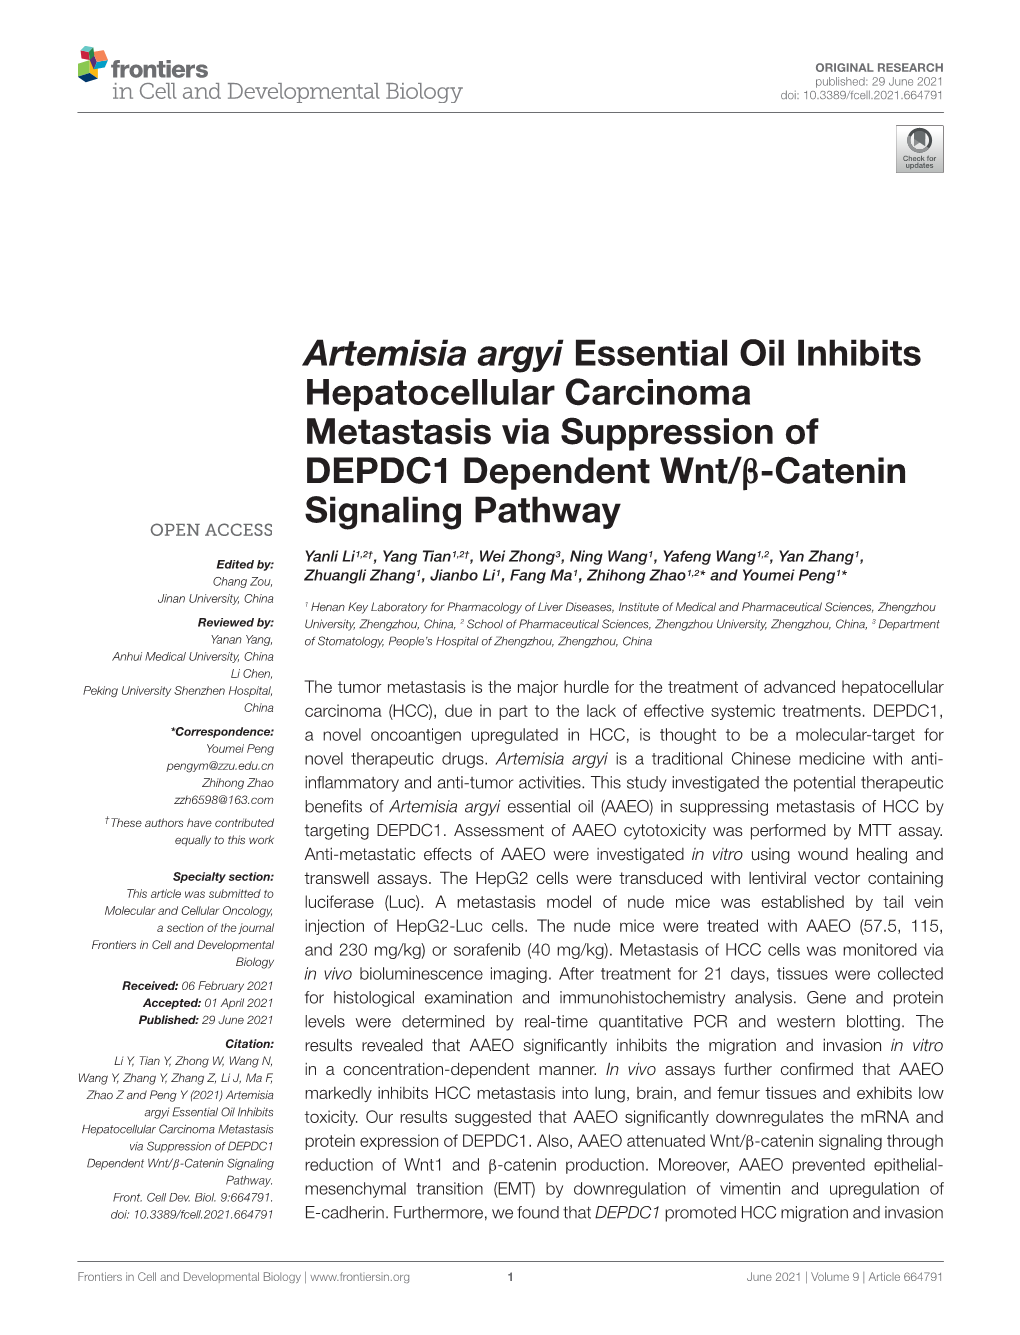 Artemisia Argyi Essential Oil Inhibits Hepatocellular Carcinoma Metastasis Via Suppression of DEPDC1 Dependent Wnt/Β-Catenin Signaling Pathway